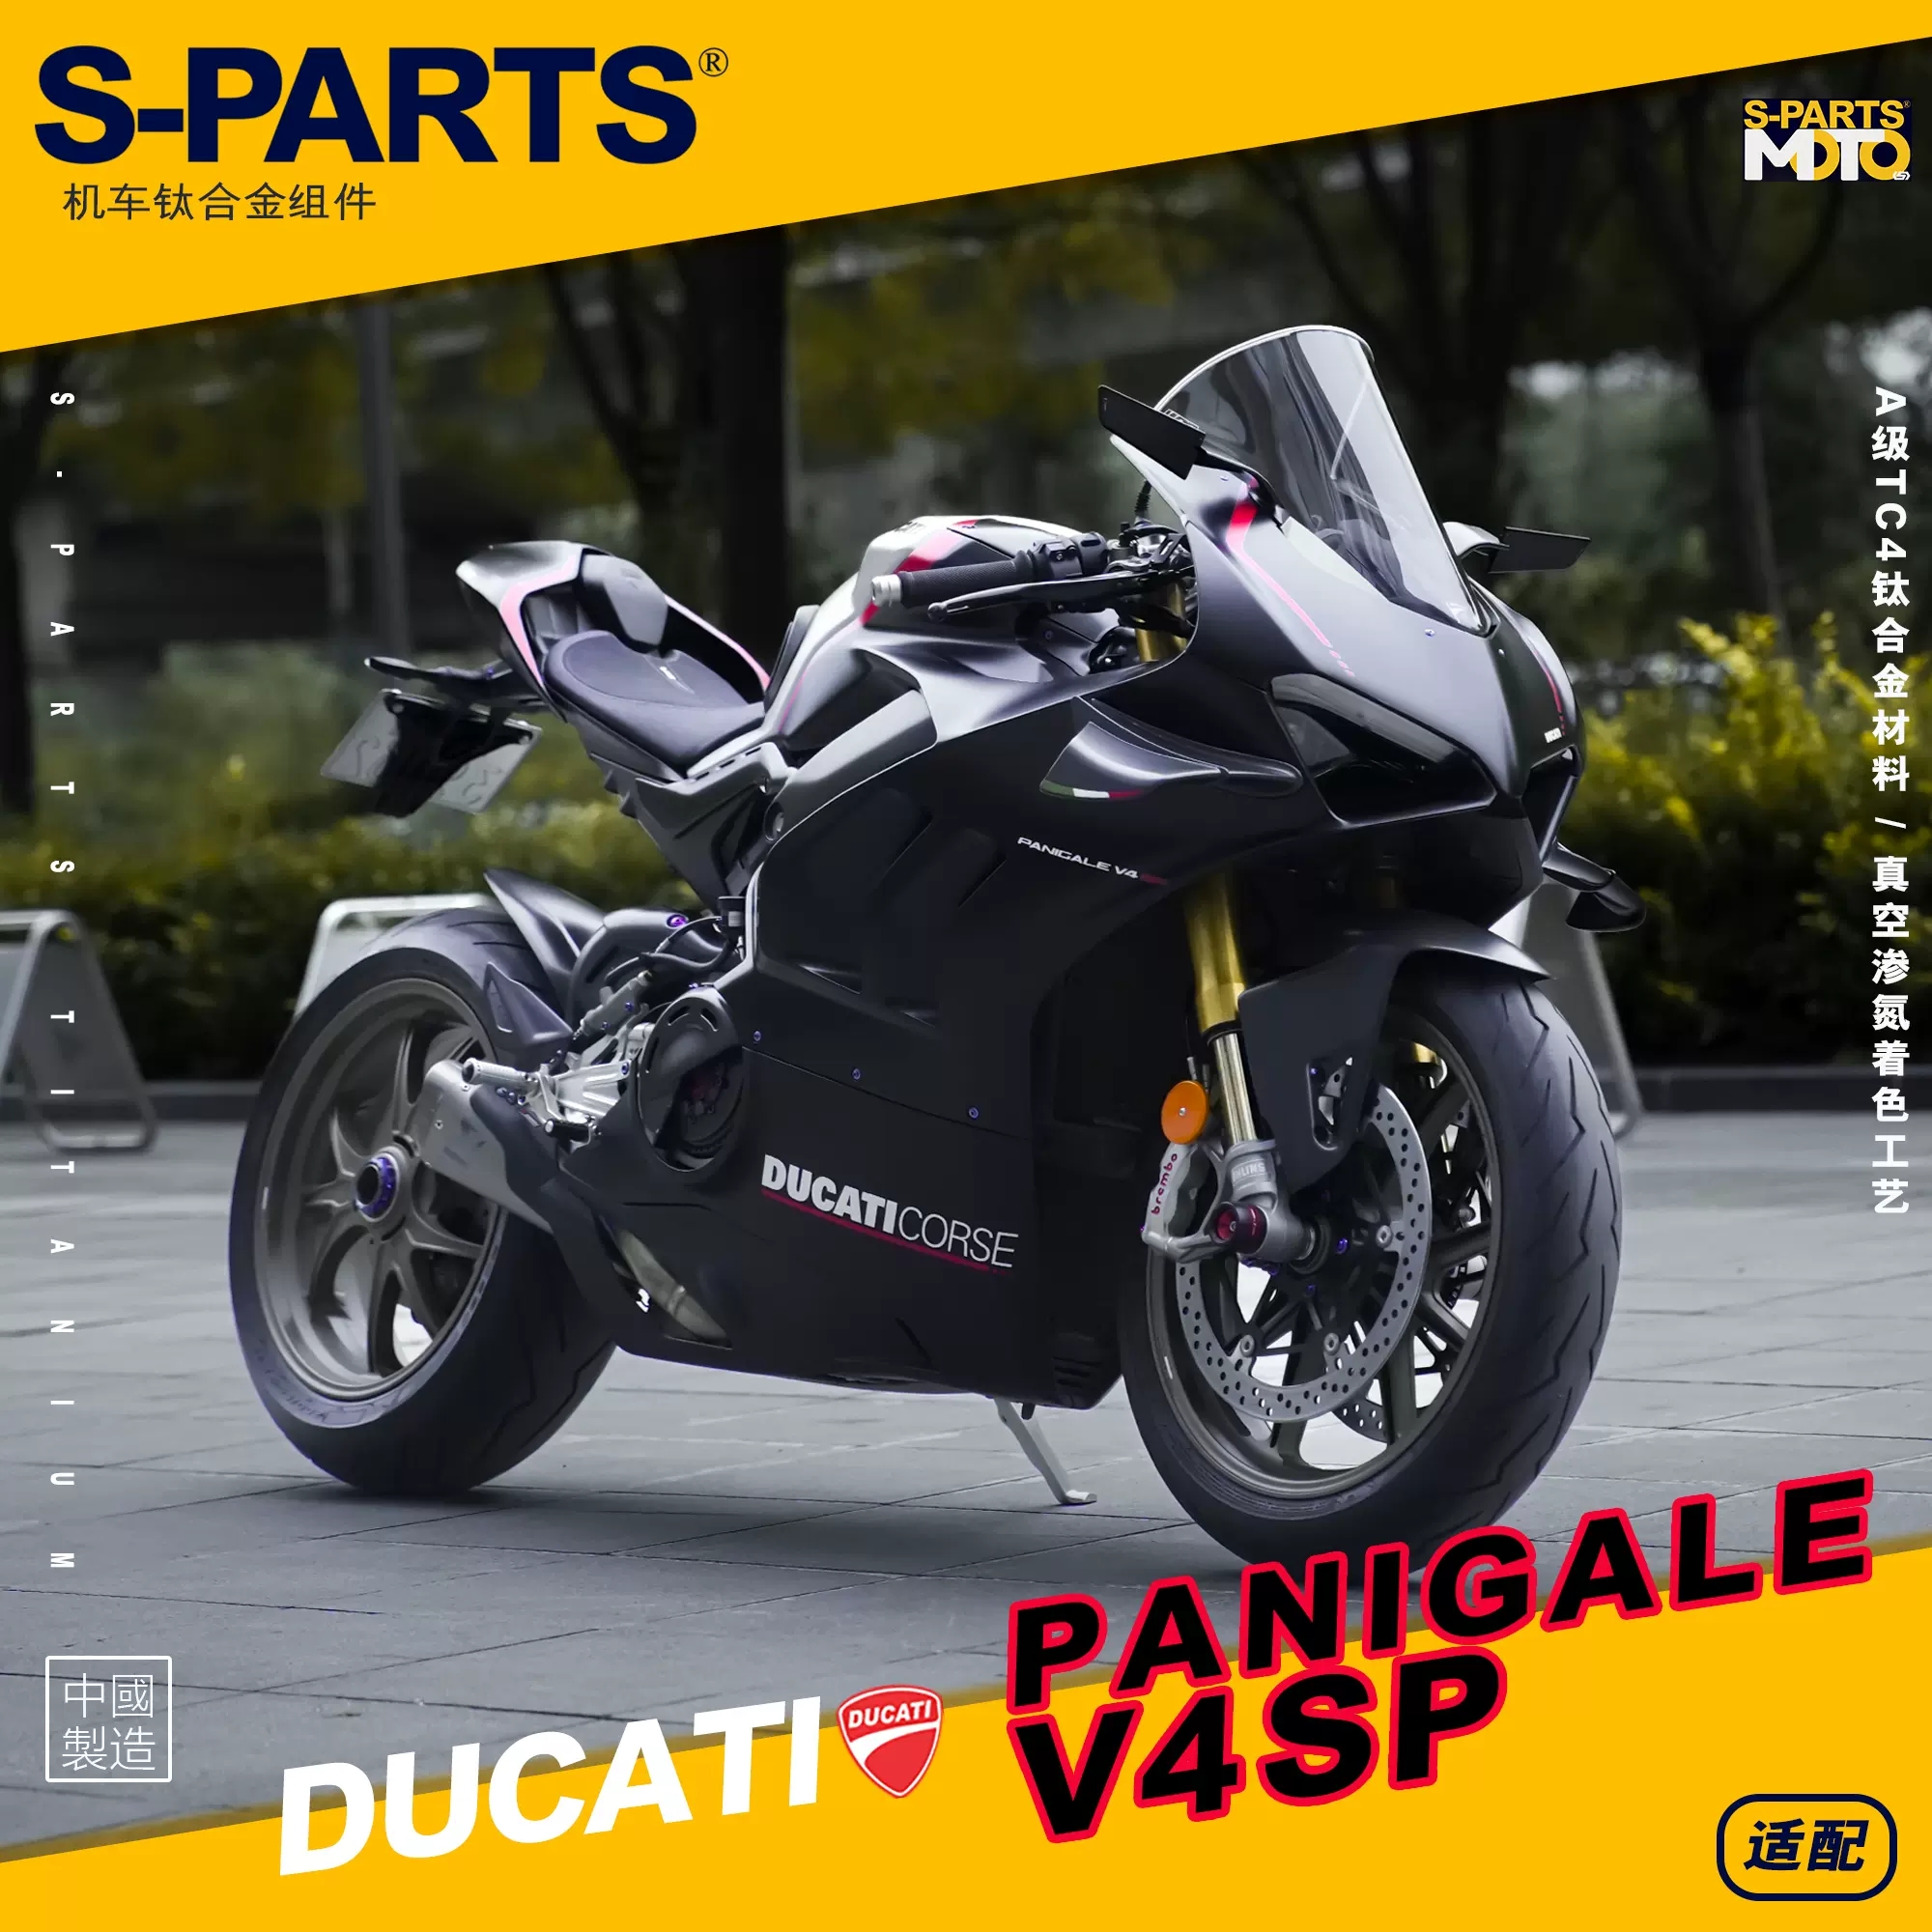 S-PARTS 钛合金螺丝适用杜卡迪 Panigale V4SP摩托车改装螺丝斯坦